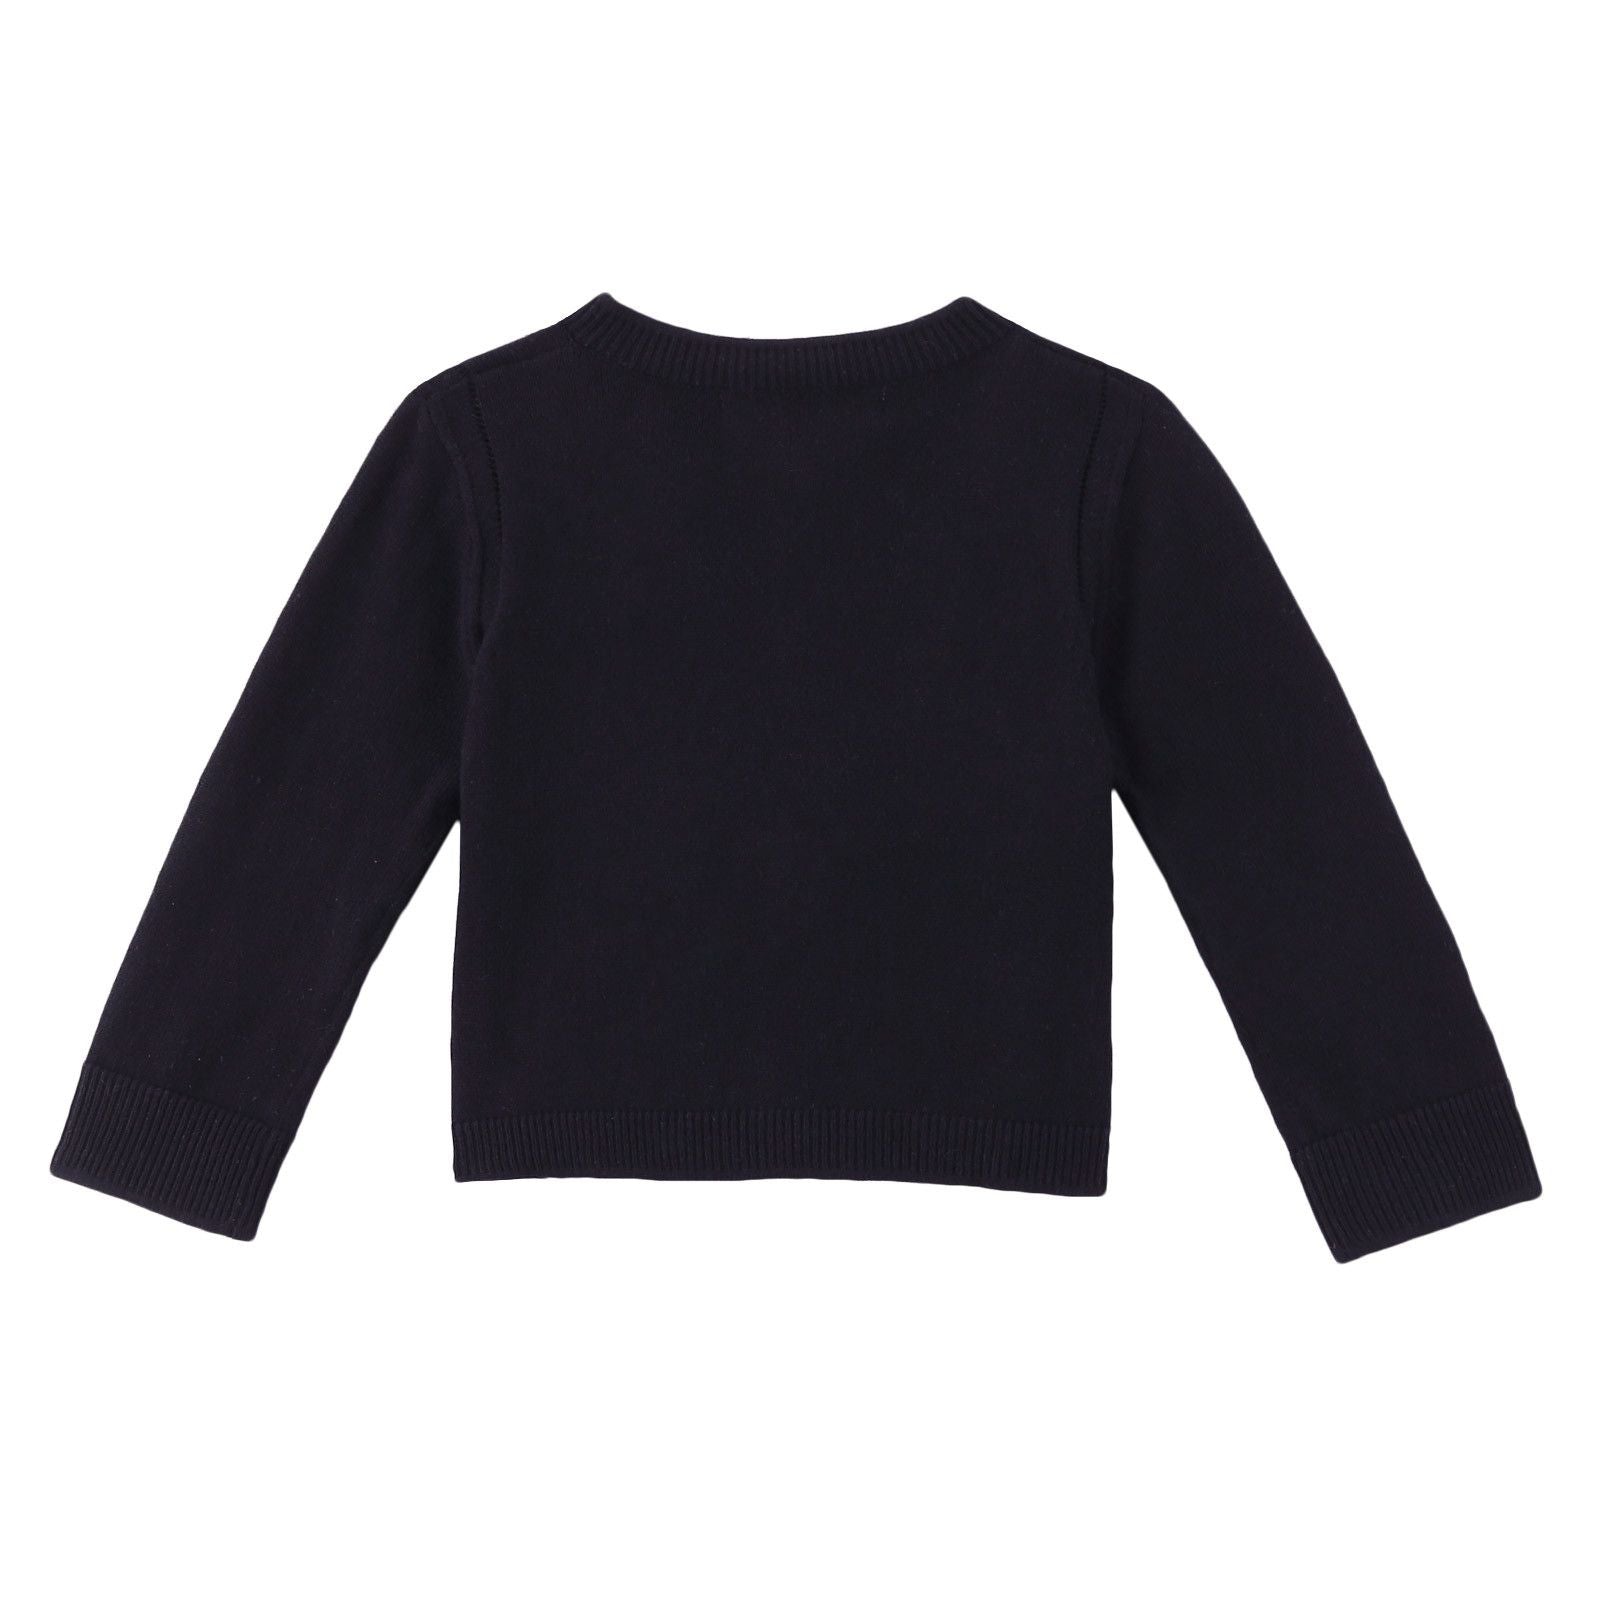 Baby Girls Black Knitted Cotton Cardigan - CÉMAROSE | Children's Fashion Store - 2